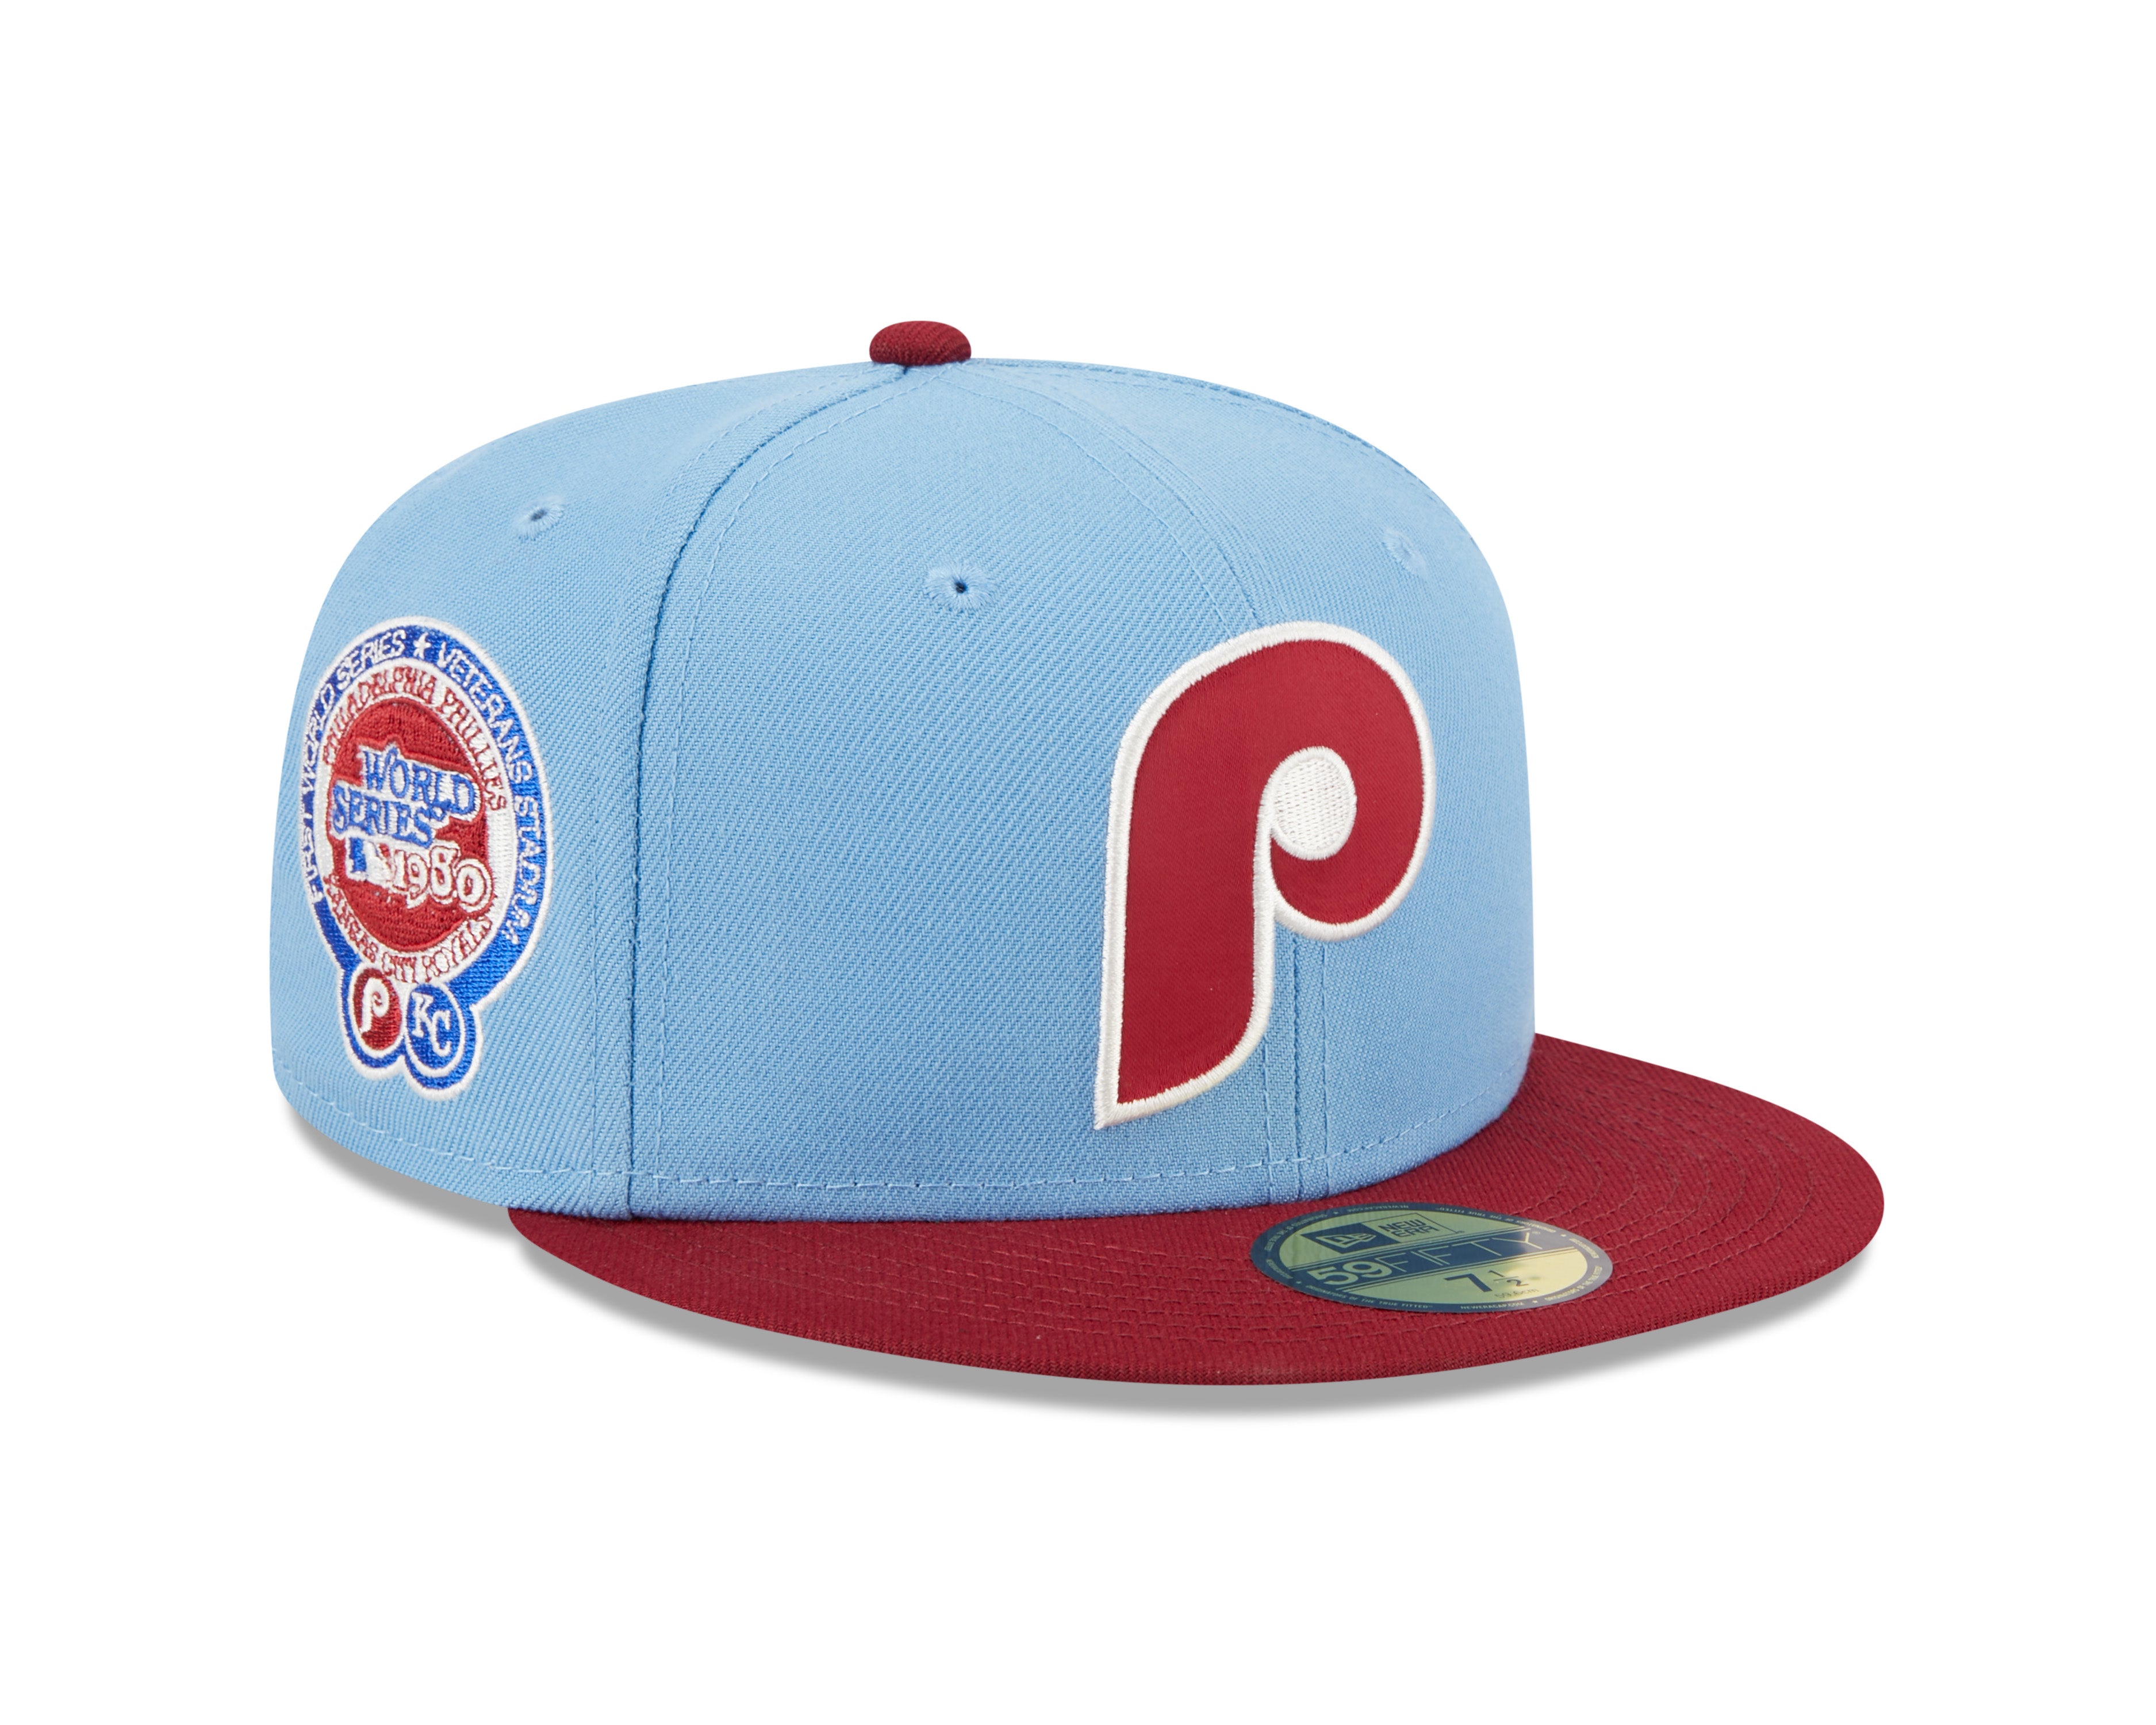 New Era - Philadelphia Phillies - 59Fifty Fitted - Powder Blues - Sky Blue - Headz Up 